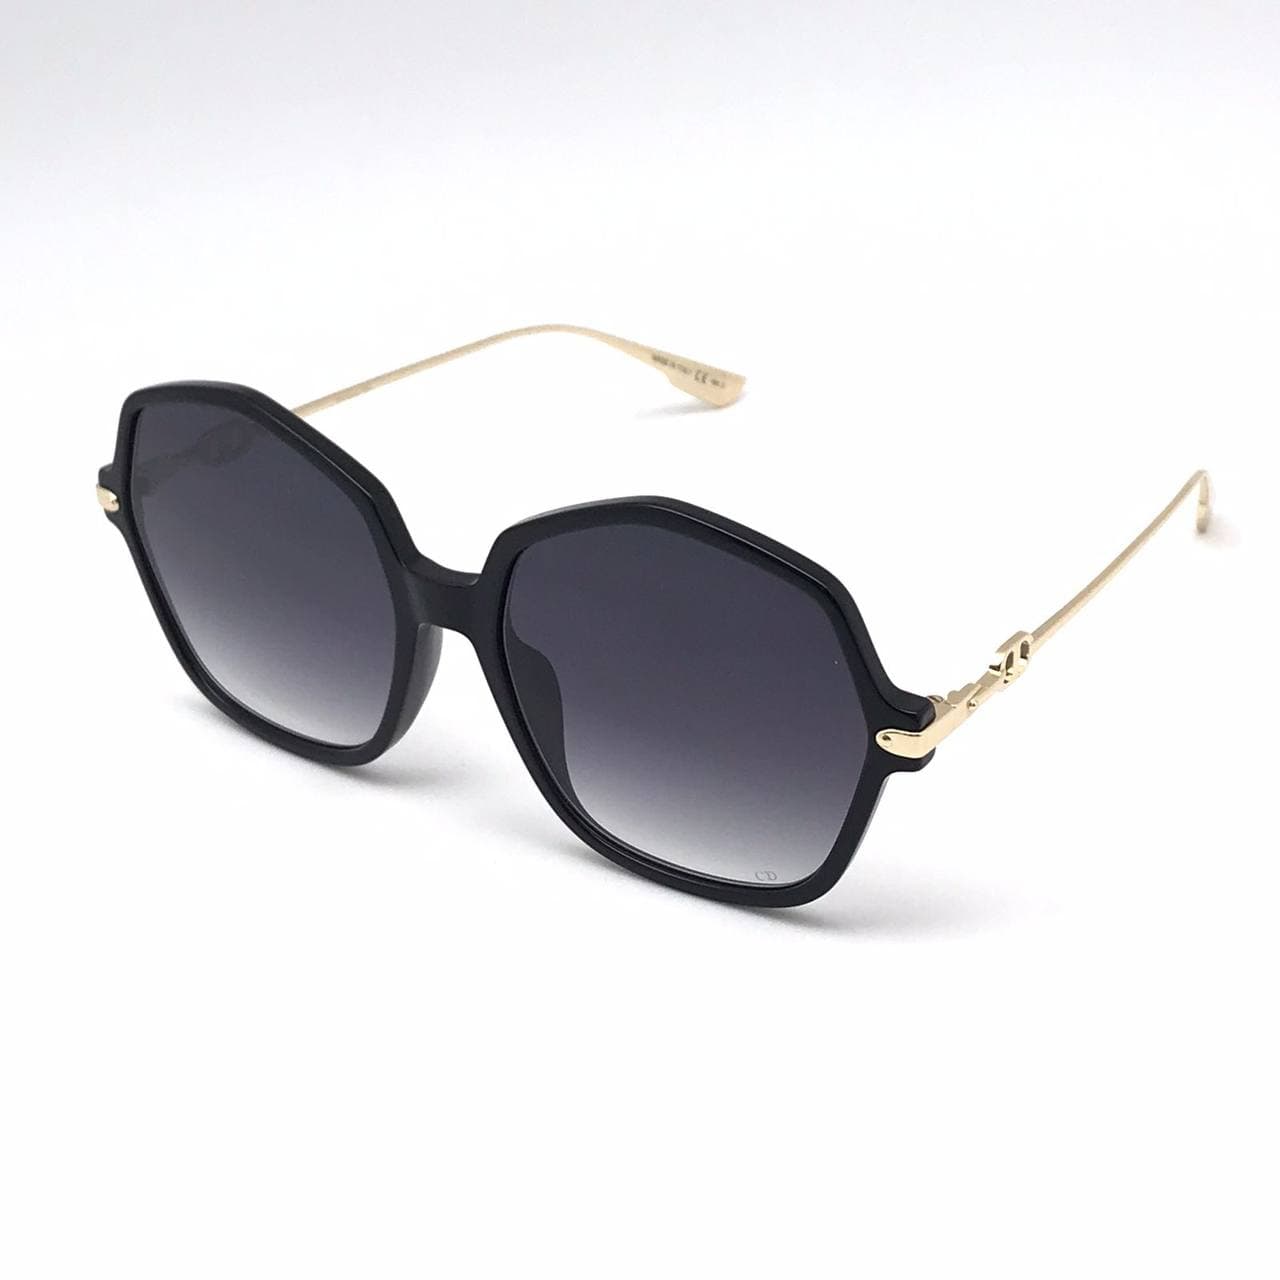 Christian Dior очки солнцезащитные. Очки диор. Очки Кристиан диор 1971 56-139 c1 цена.